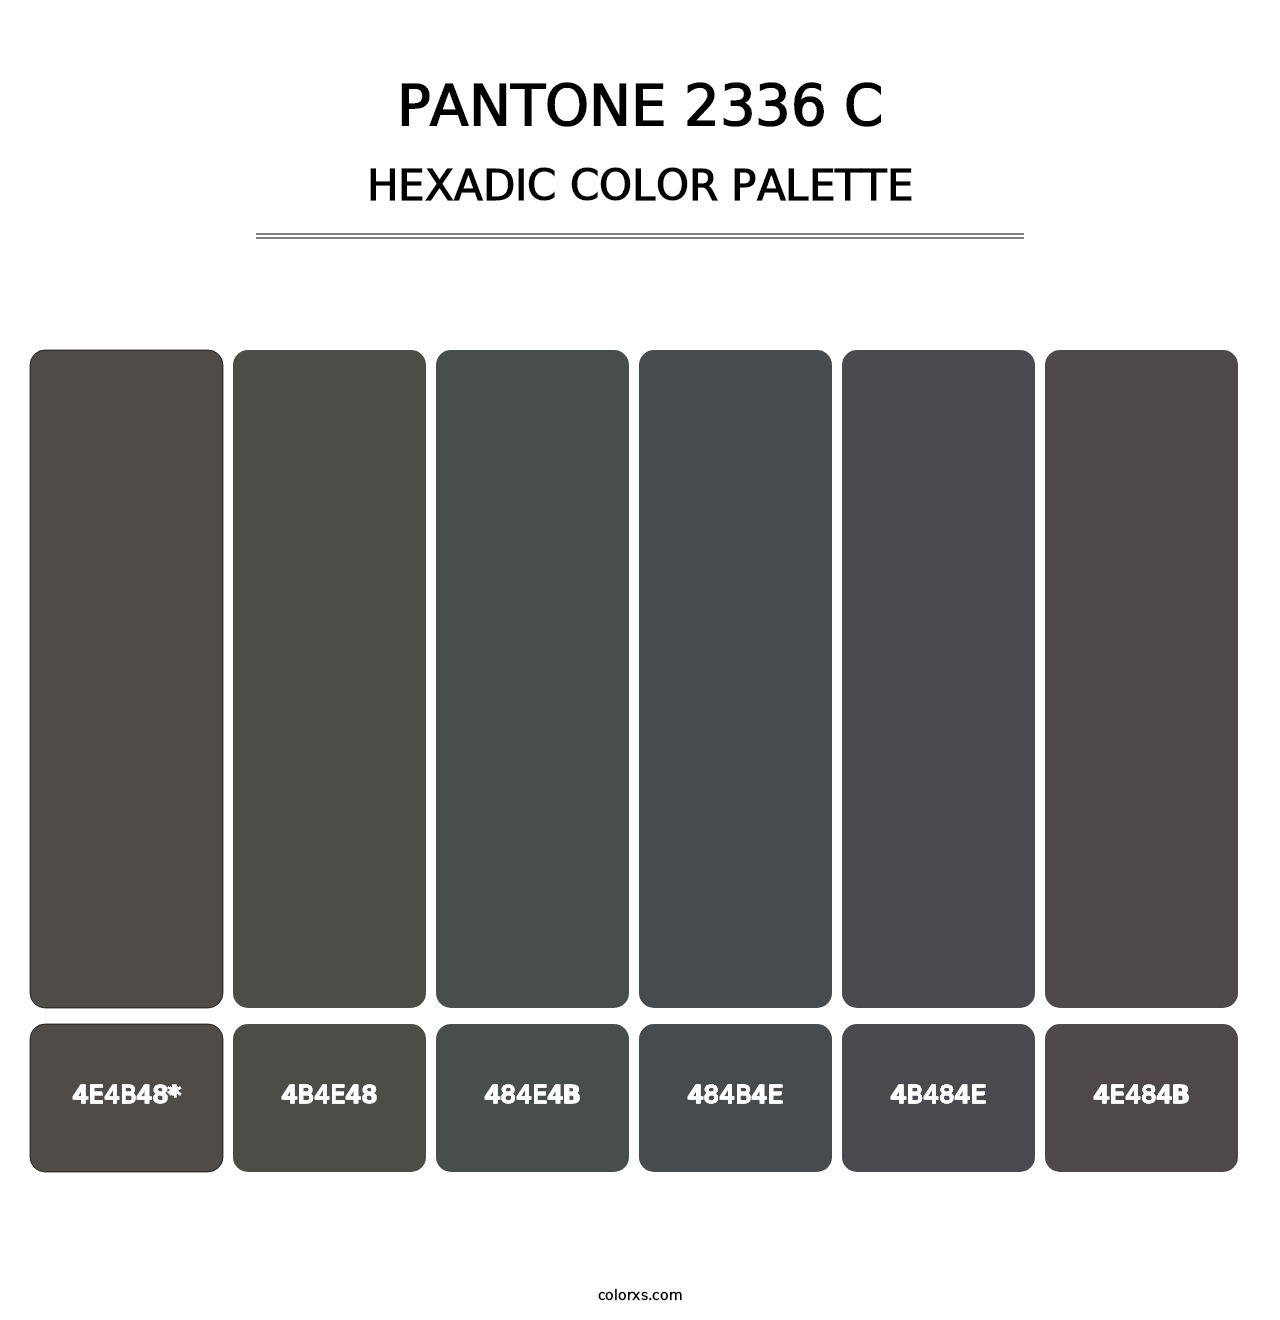 PANTONE 2336 C - Hexadic Color Palette